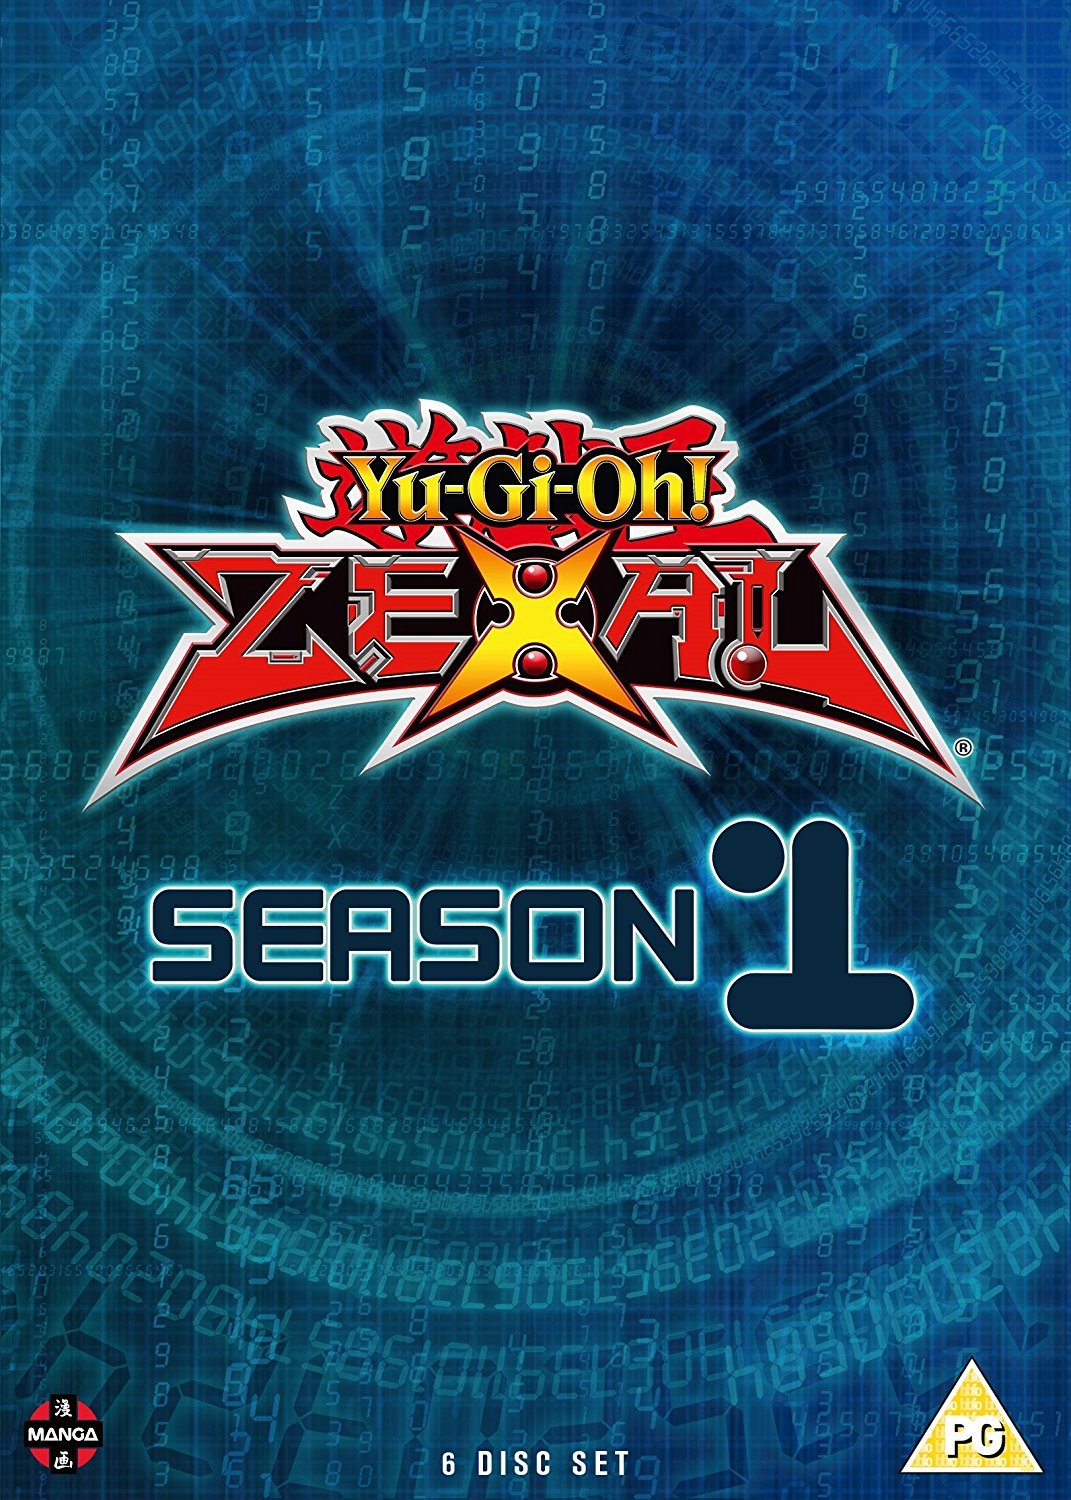 VIZ  Blog / Yu-Gi-Oh! Zexal Series Review